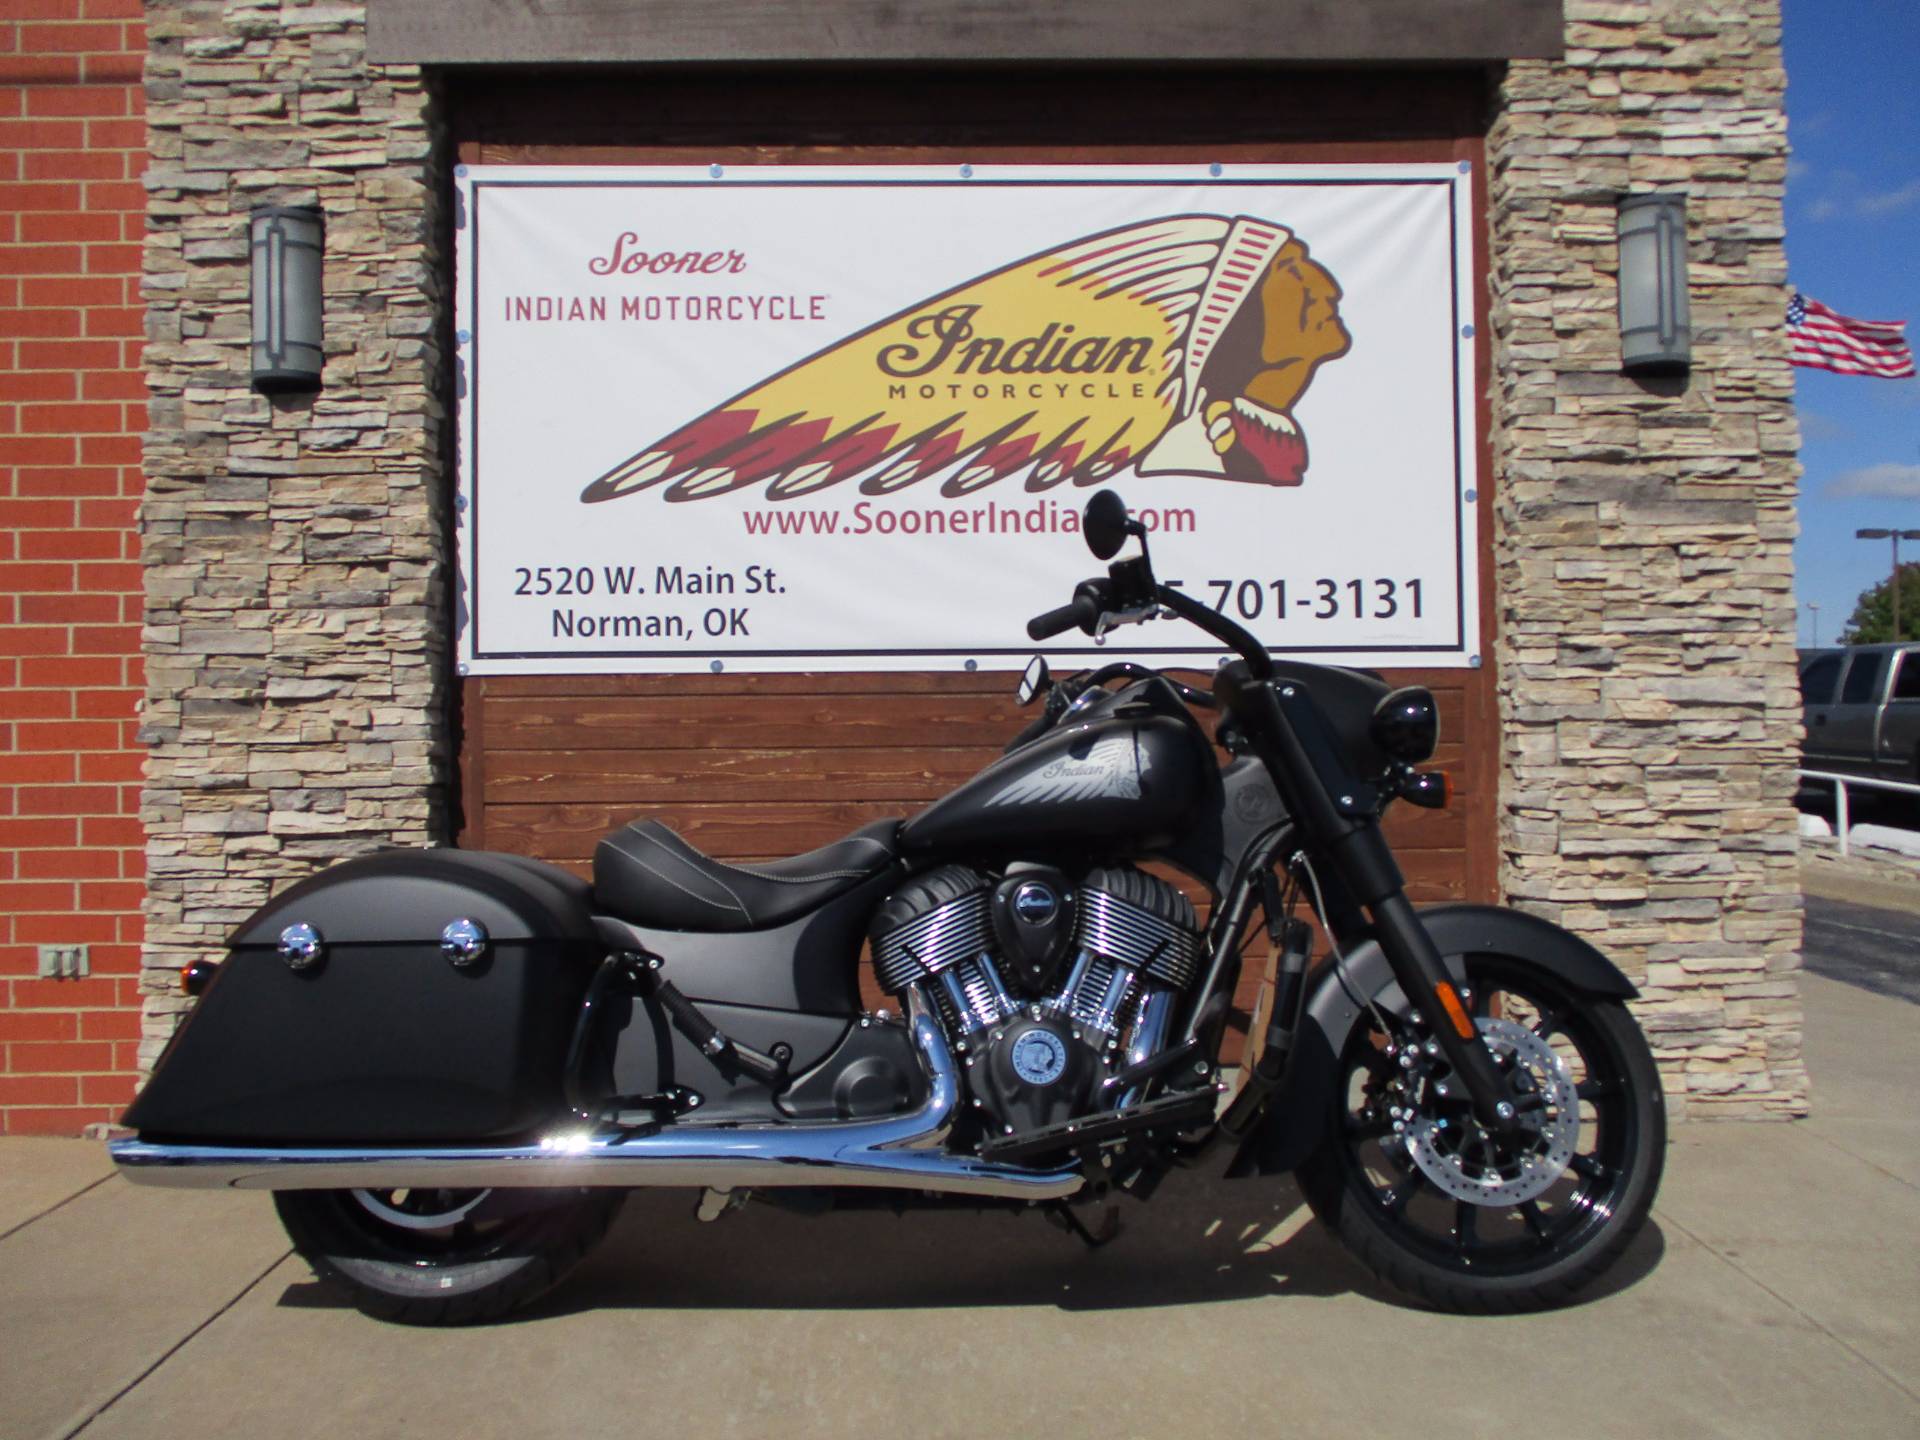 2018 Indian Springfield Dark Horse Motorcycles Norman Oklahoma 358063